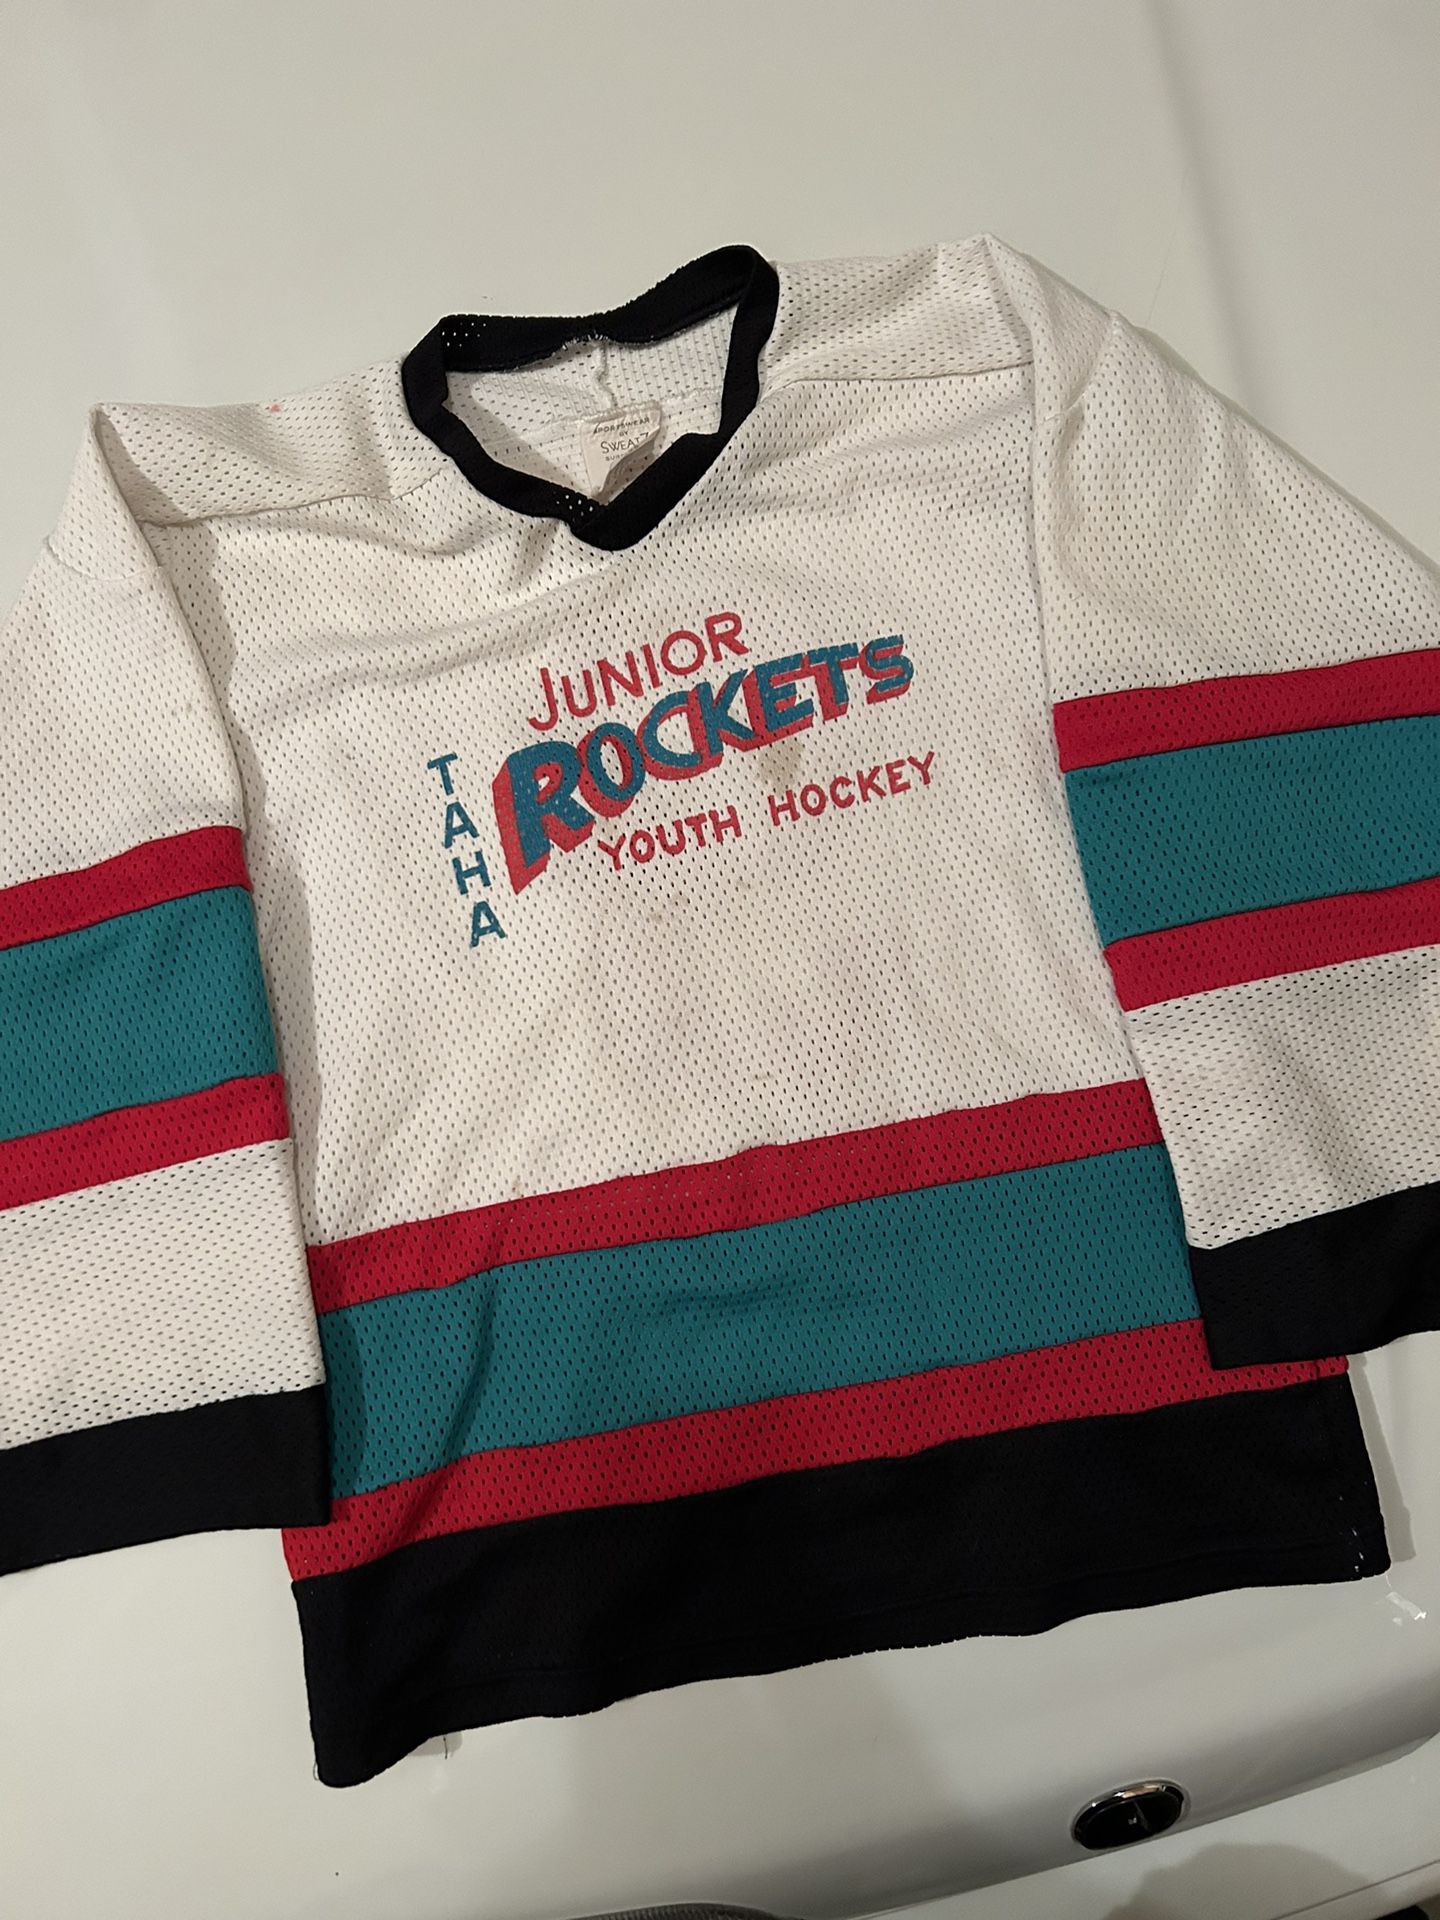 Everett Silvertips Toddler Hockey Jersey for Sale in Fife, WA - OfferUp